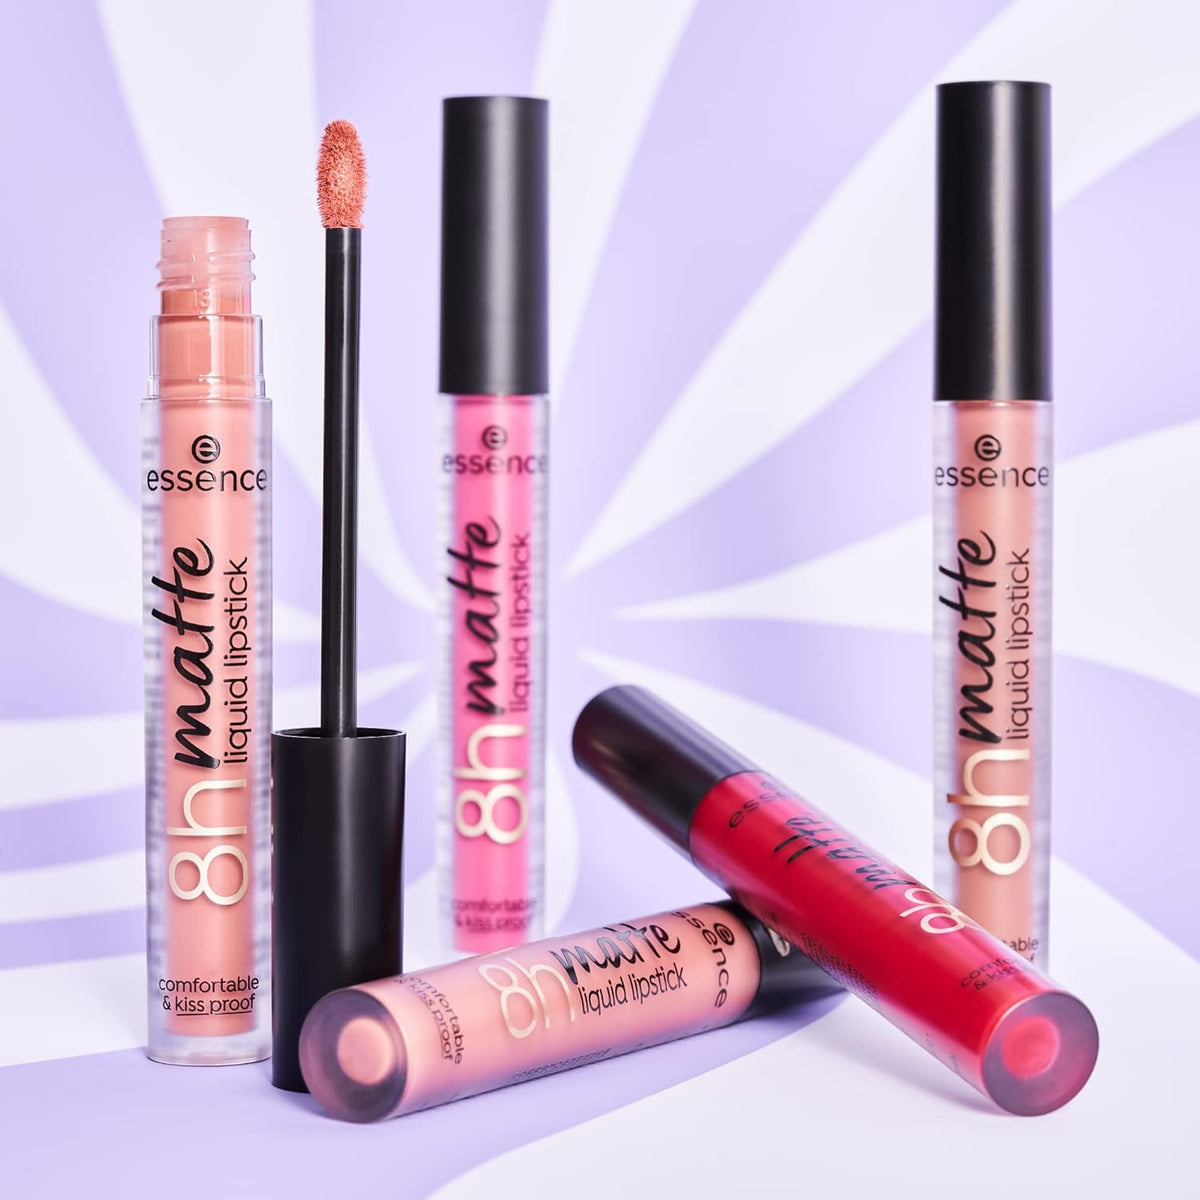 Essence Matte Liquid Lipstick 8H Comfortable & Kiss Proof - 05 Pink Blush